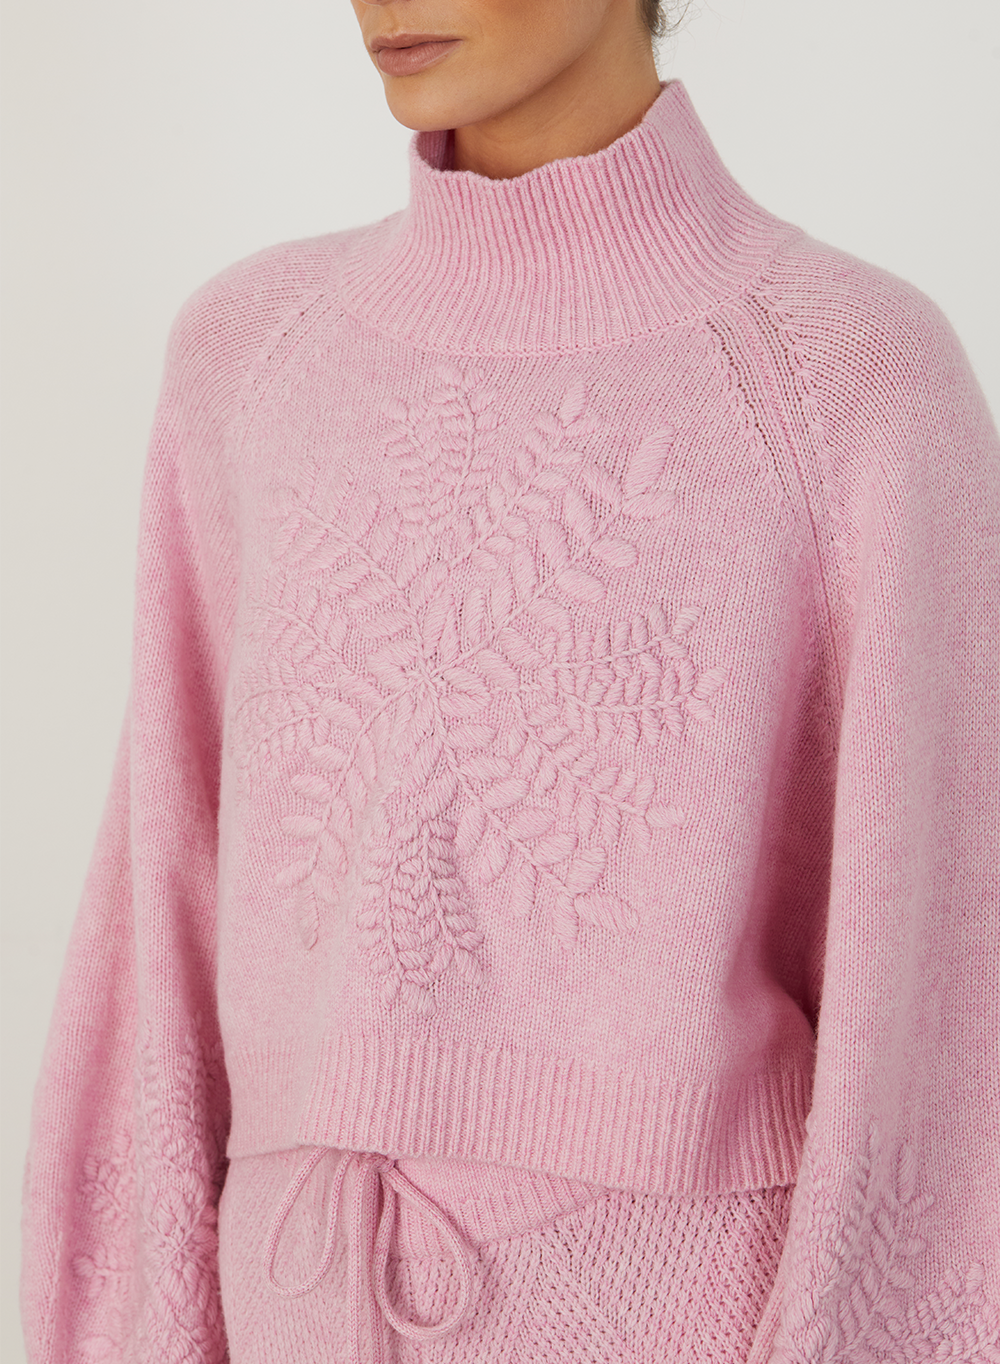 Natasha Wool Embroidery Knit